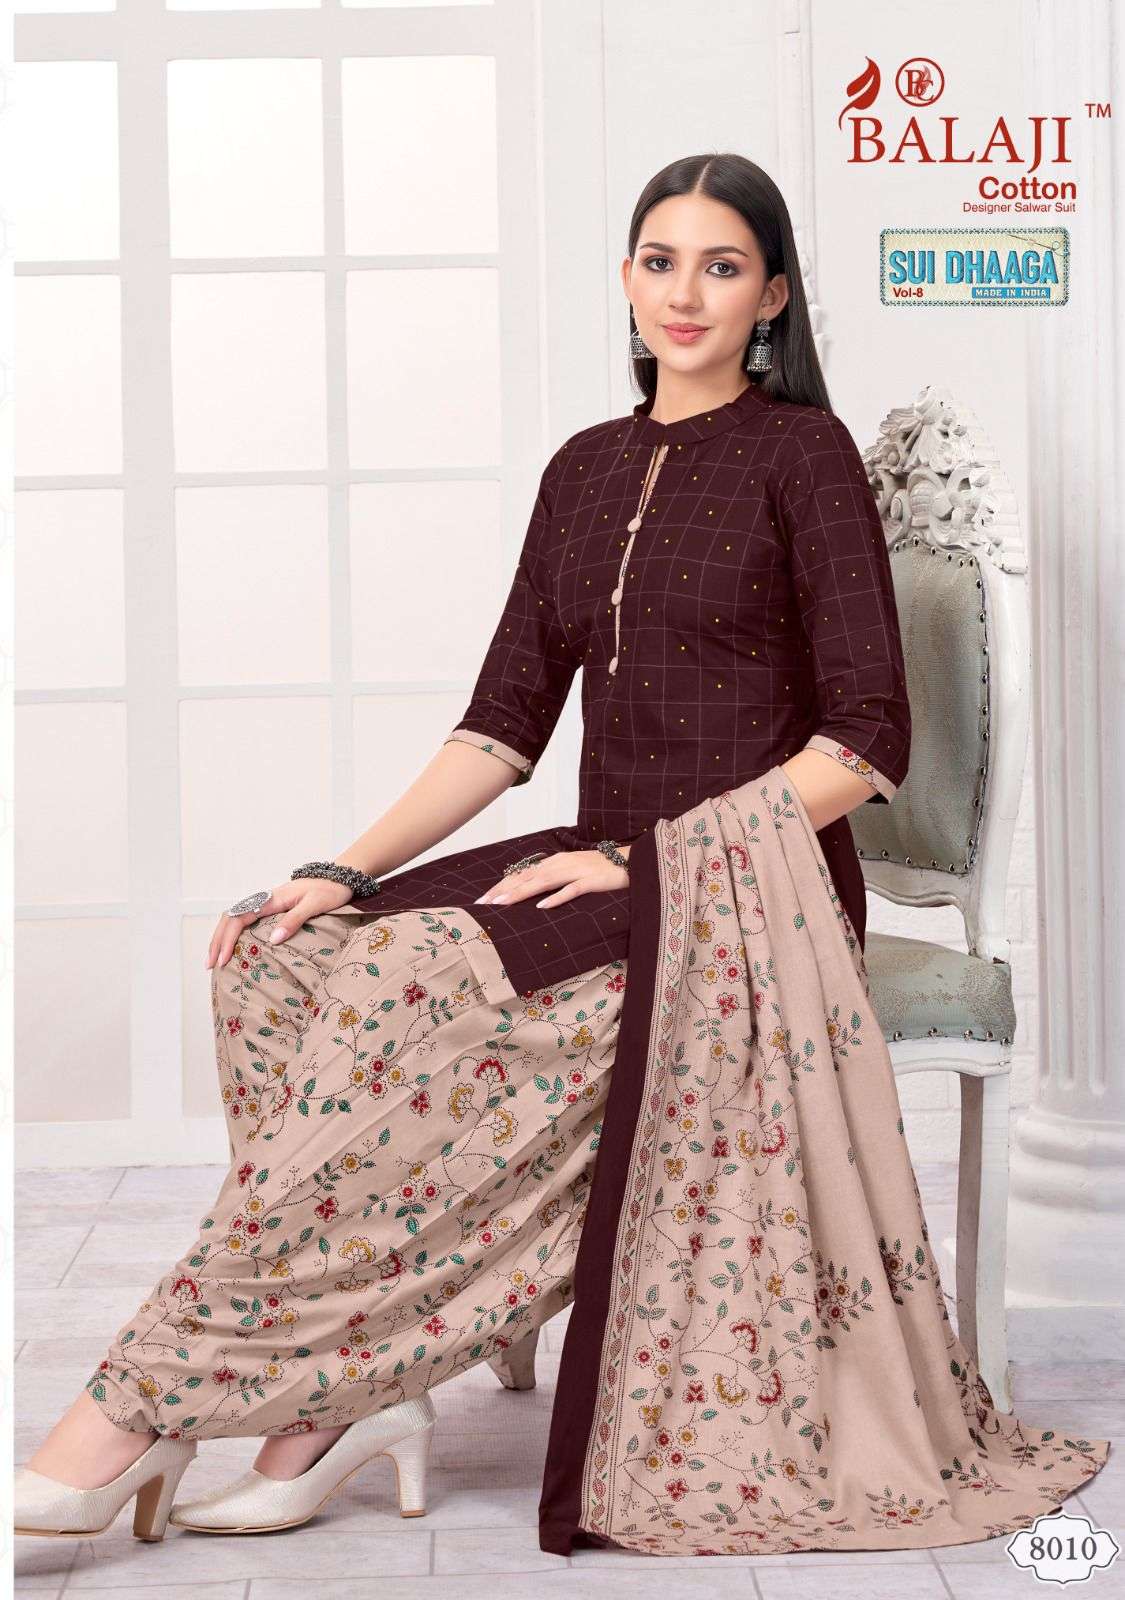 balaji cotton sui dhaaga vol-8 8001-8012 series trendy designer dress material catalogue online supplier surat 